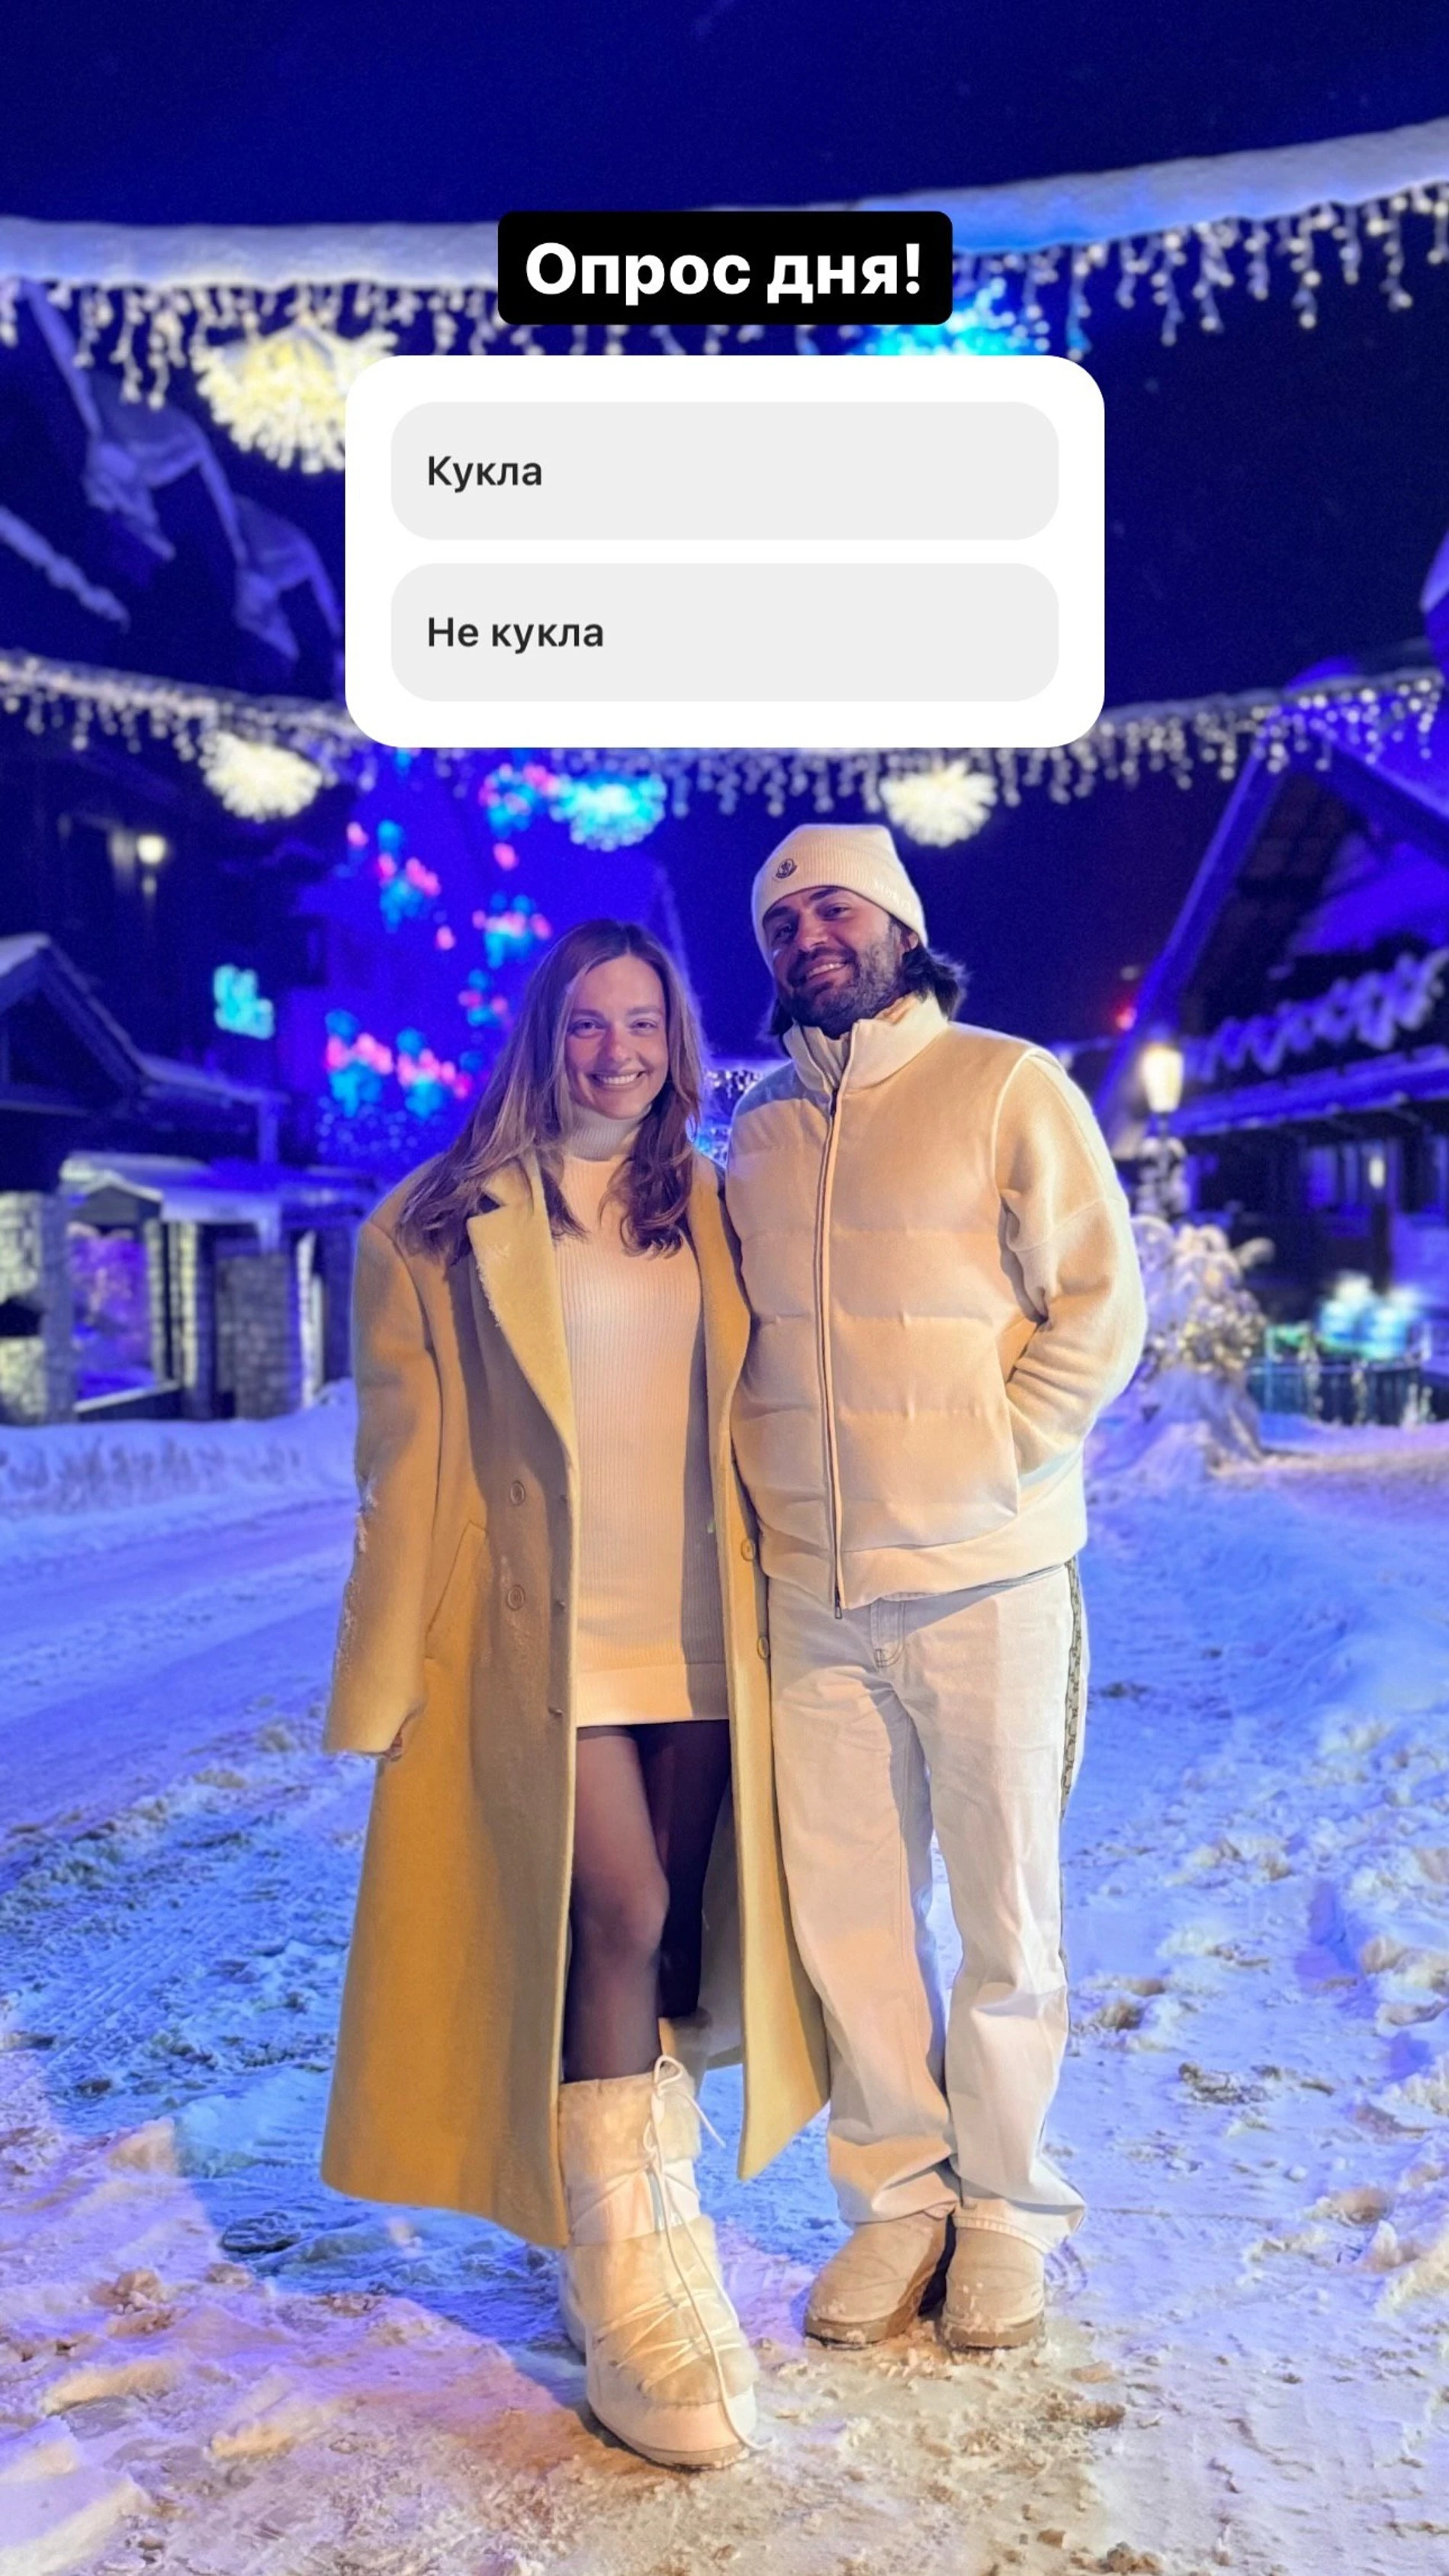 Сергей Косенко и его жена. Скриншот: инстаграм* @sergey_kosenko